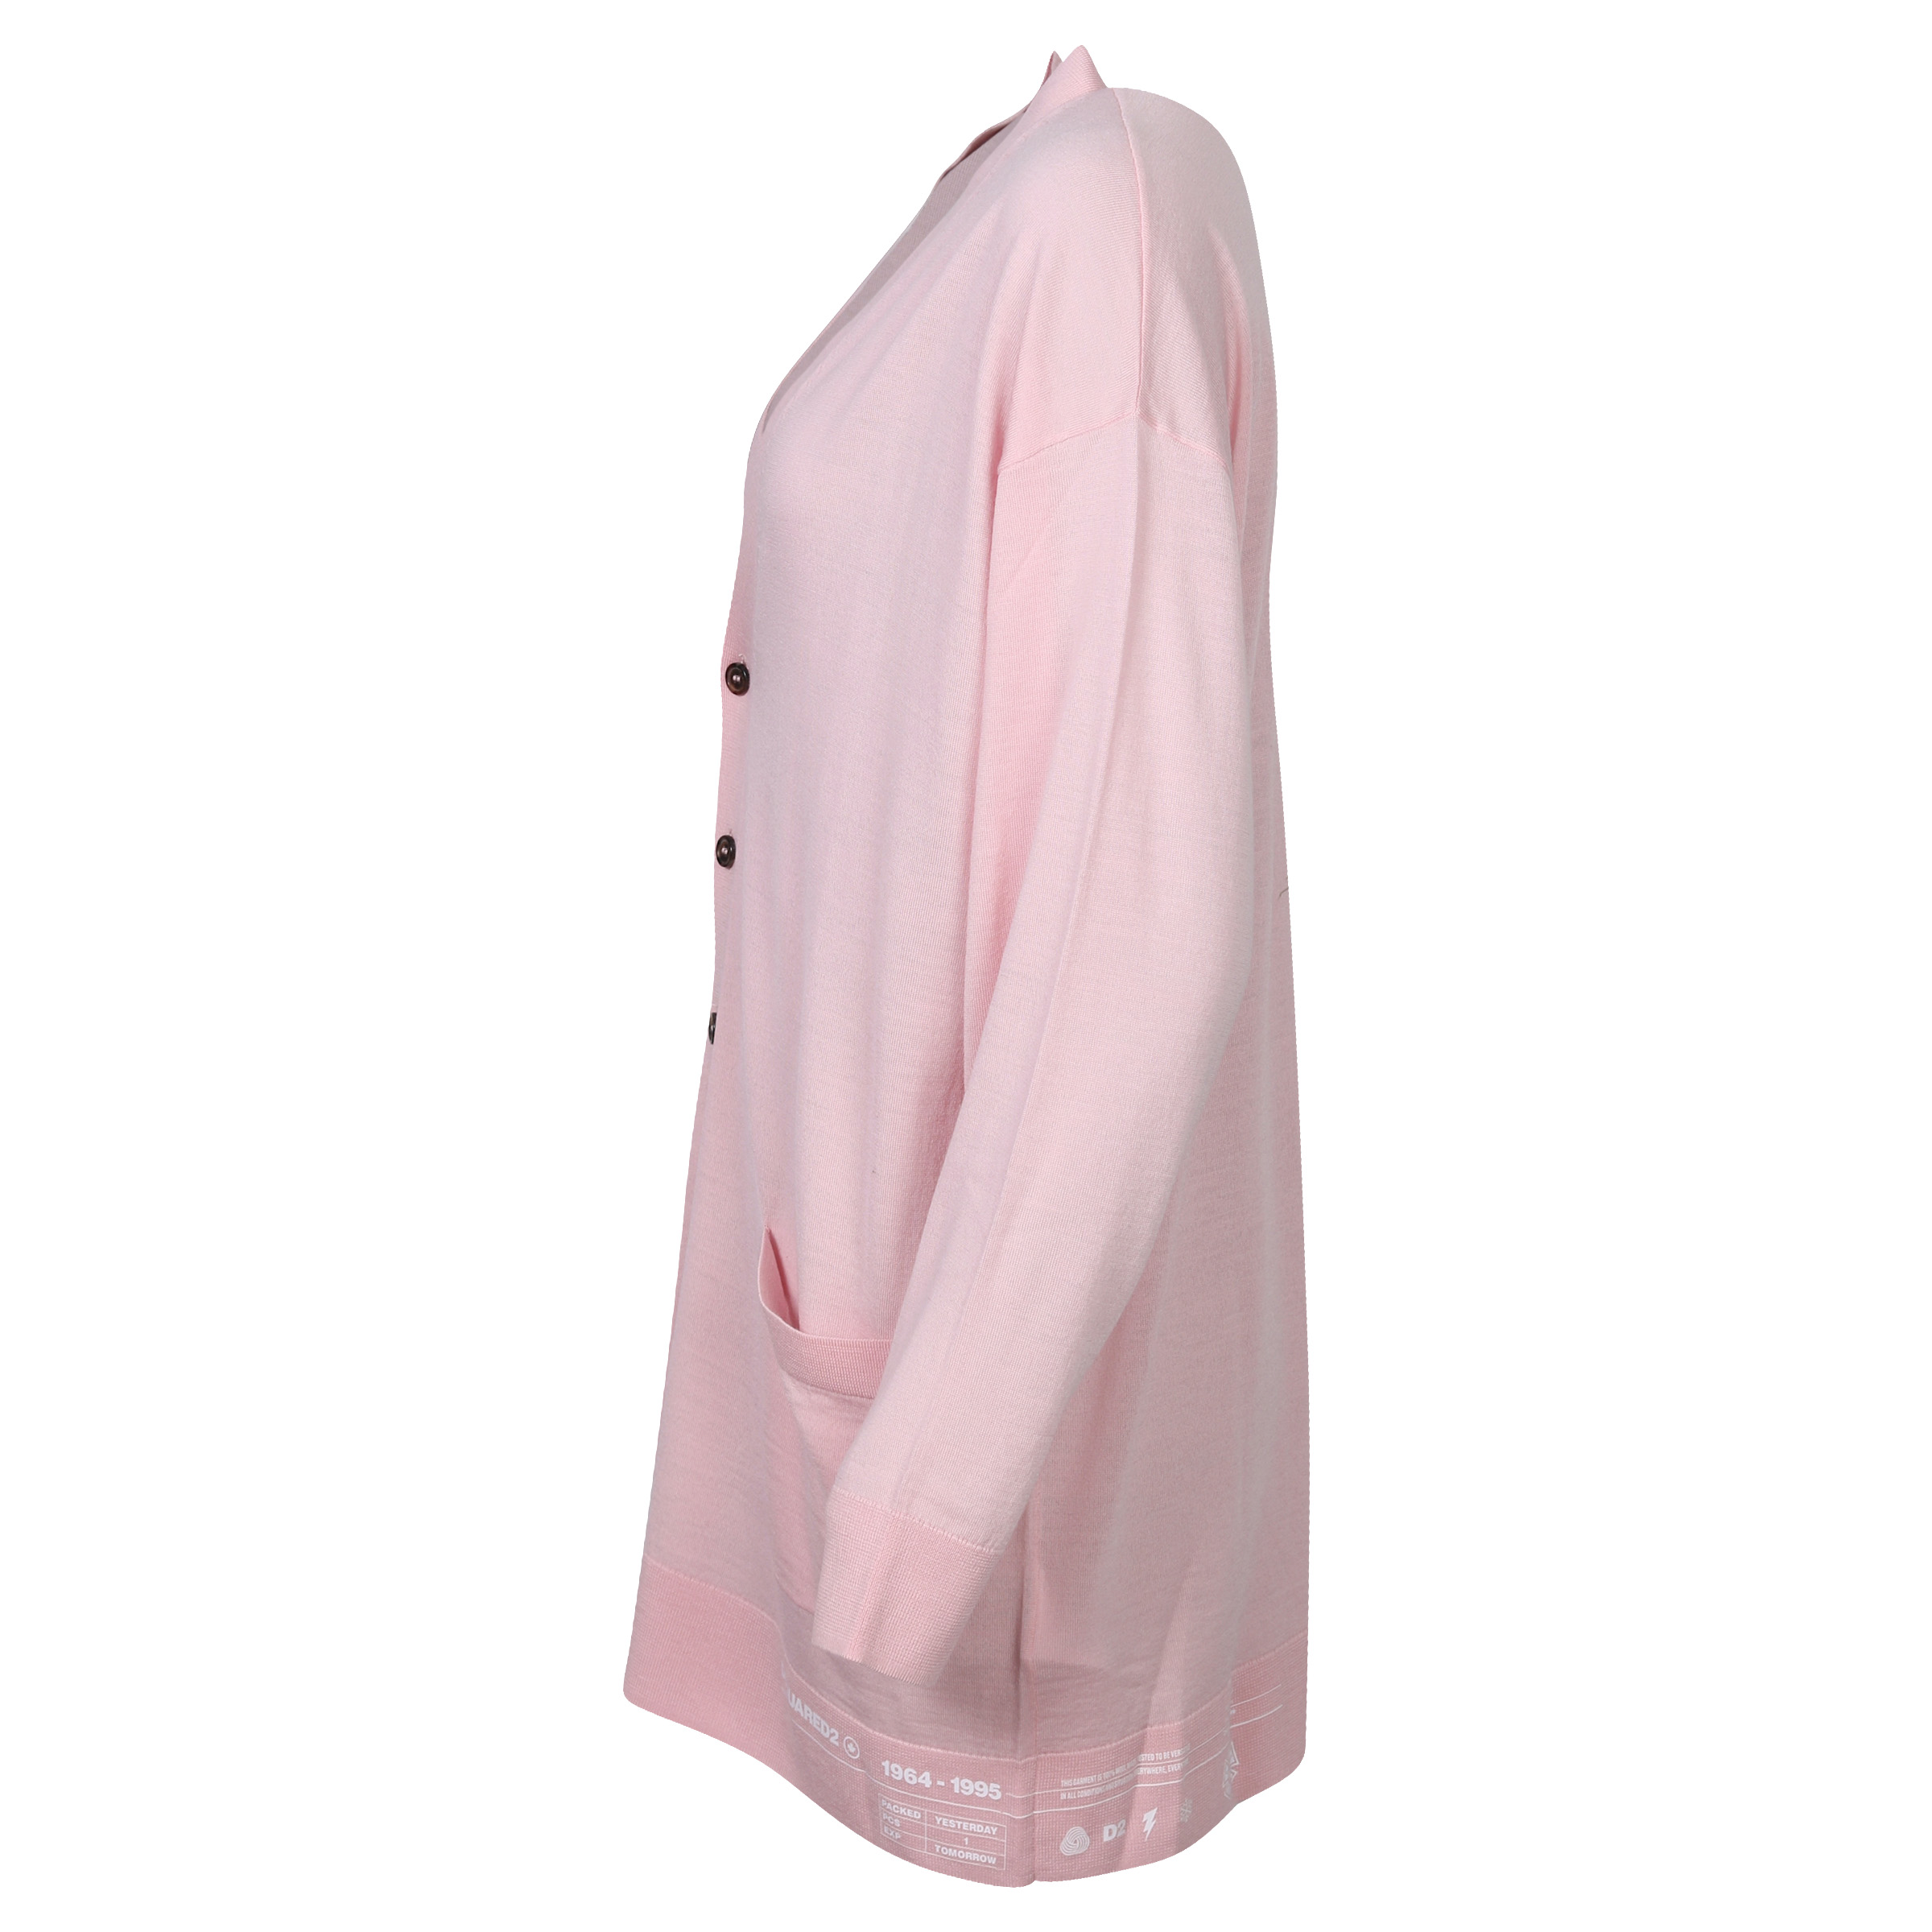 Dsquared Knit Cardigan Light Pink S